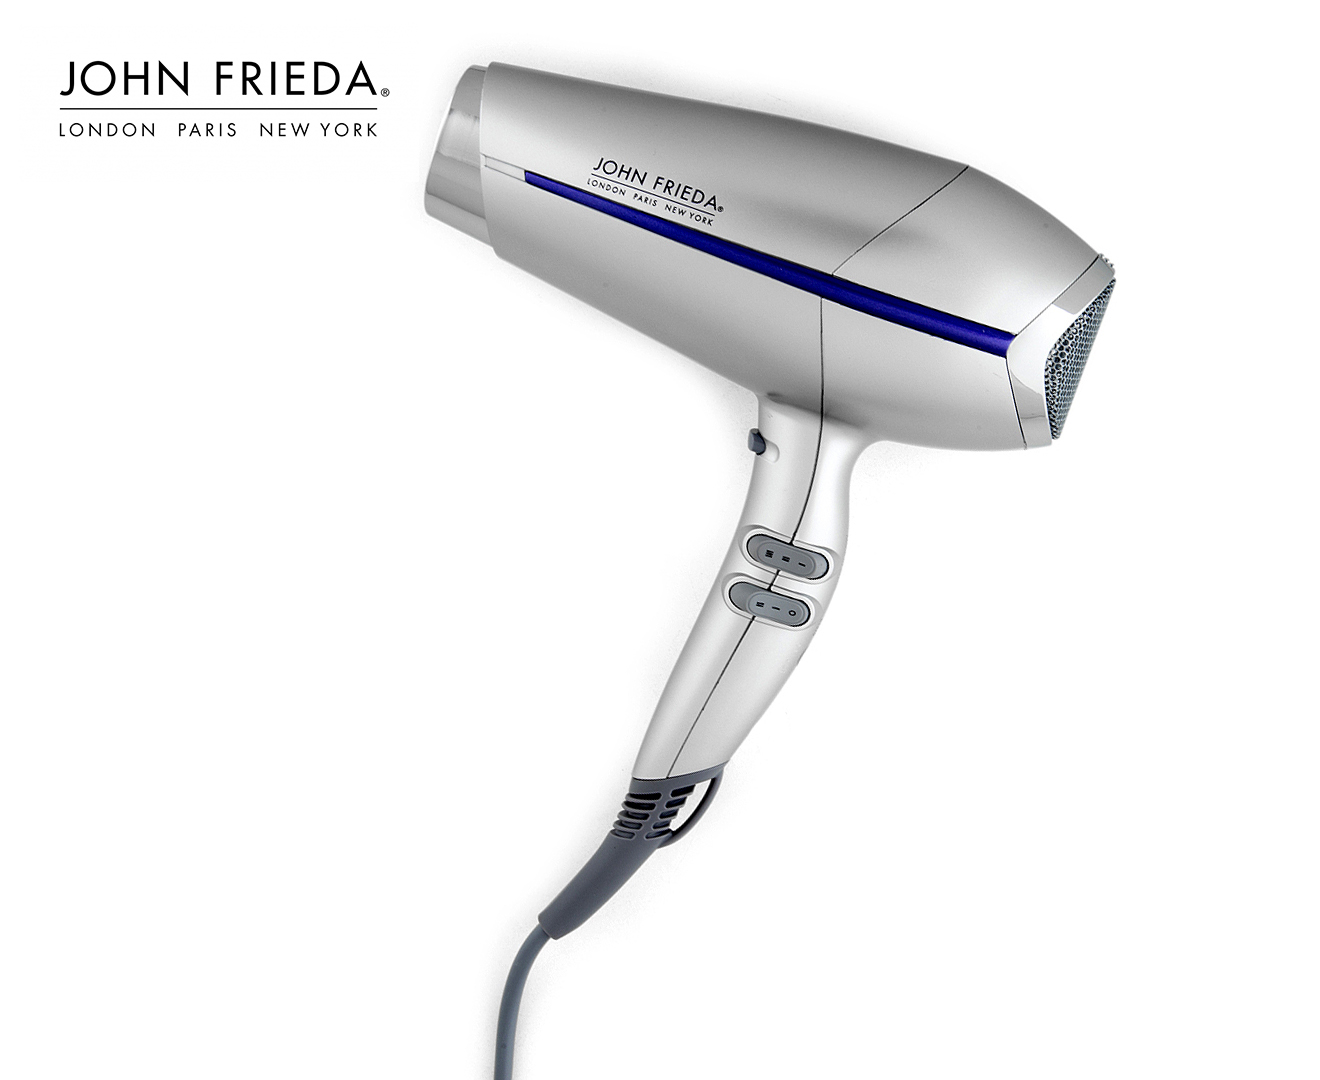 John Frieda AC Motor Hair Dryer Silver 9338841002558 EBay